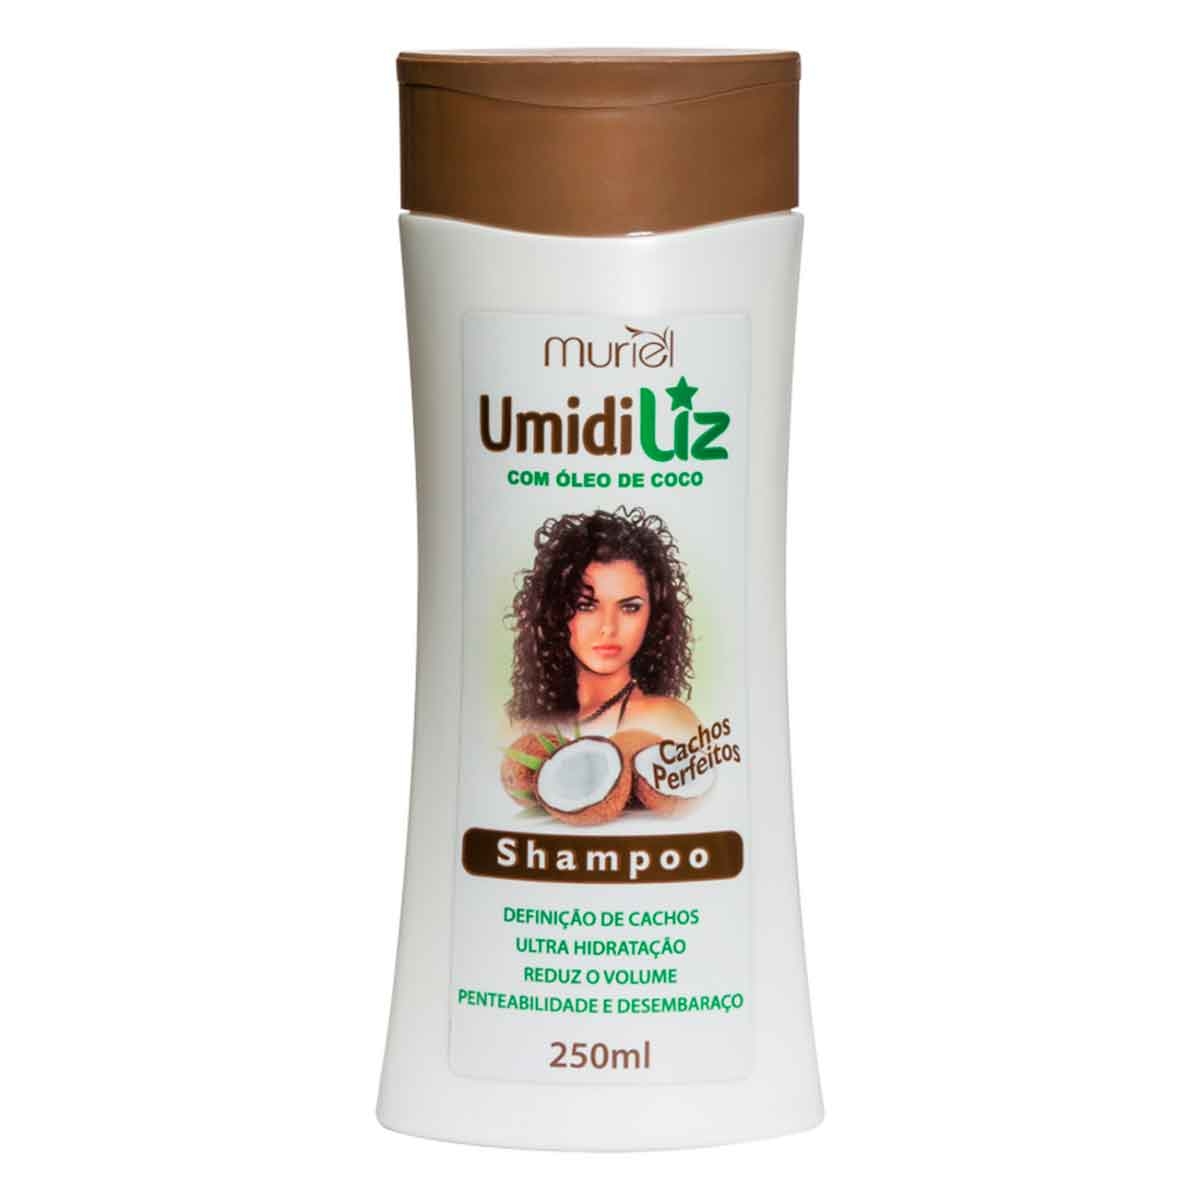 Shampoo Umidiliz Óleo de Coco com 250ml Muriel 250ml